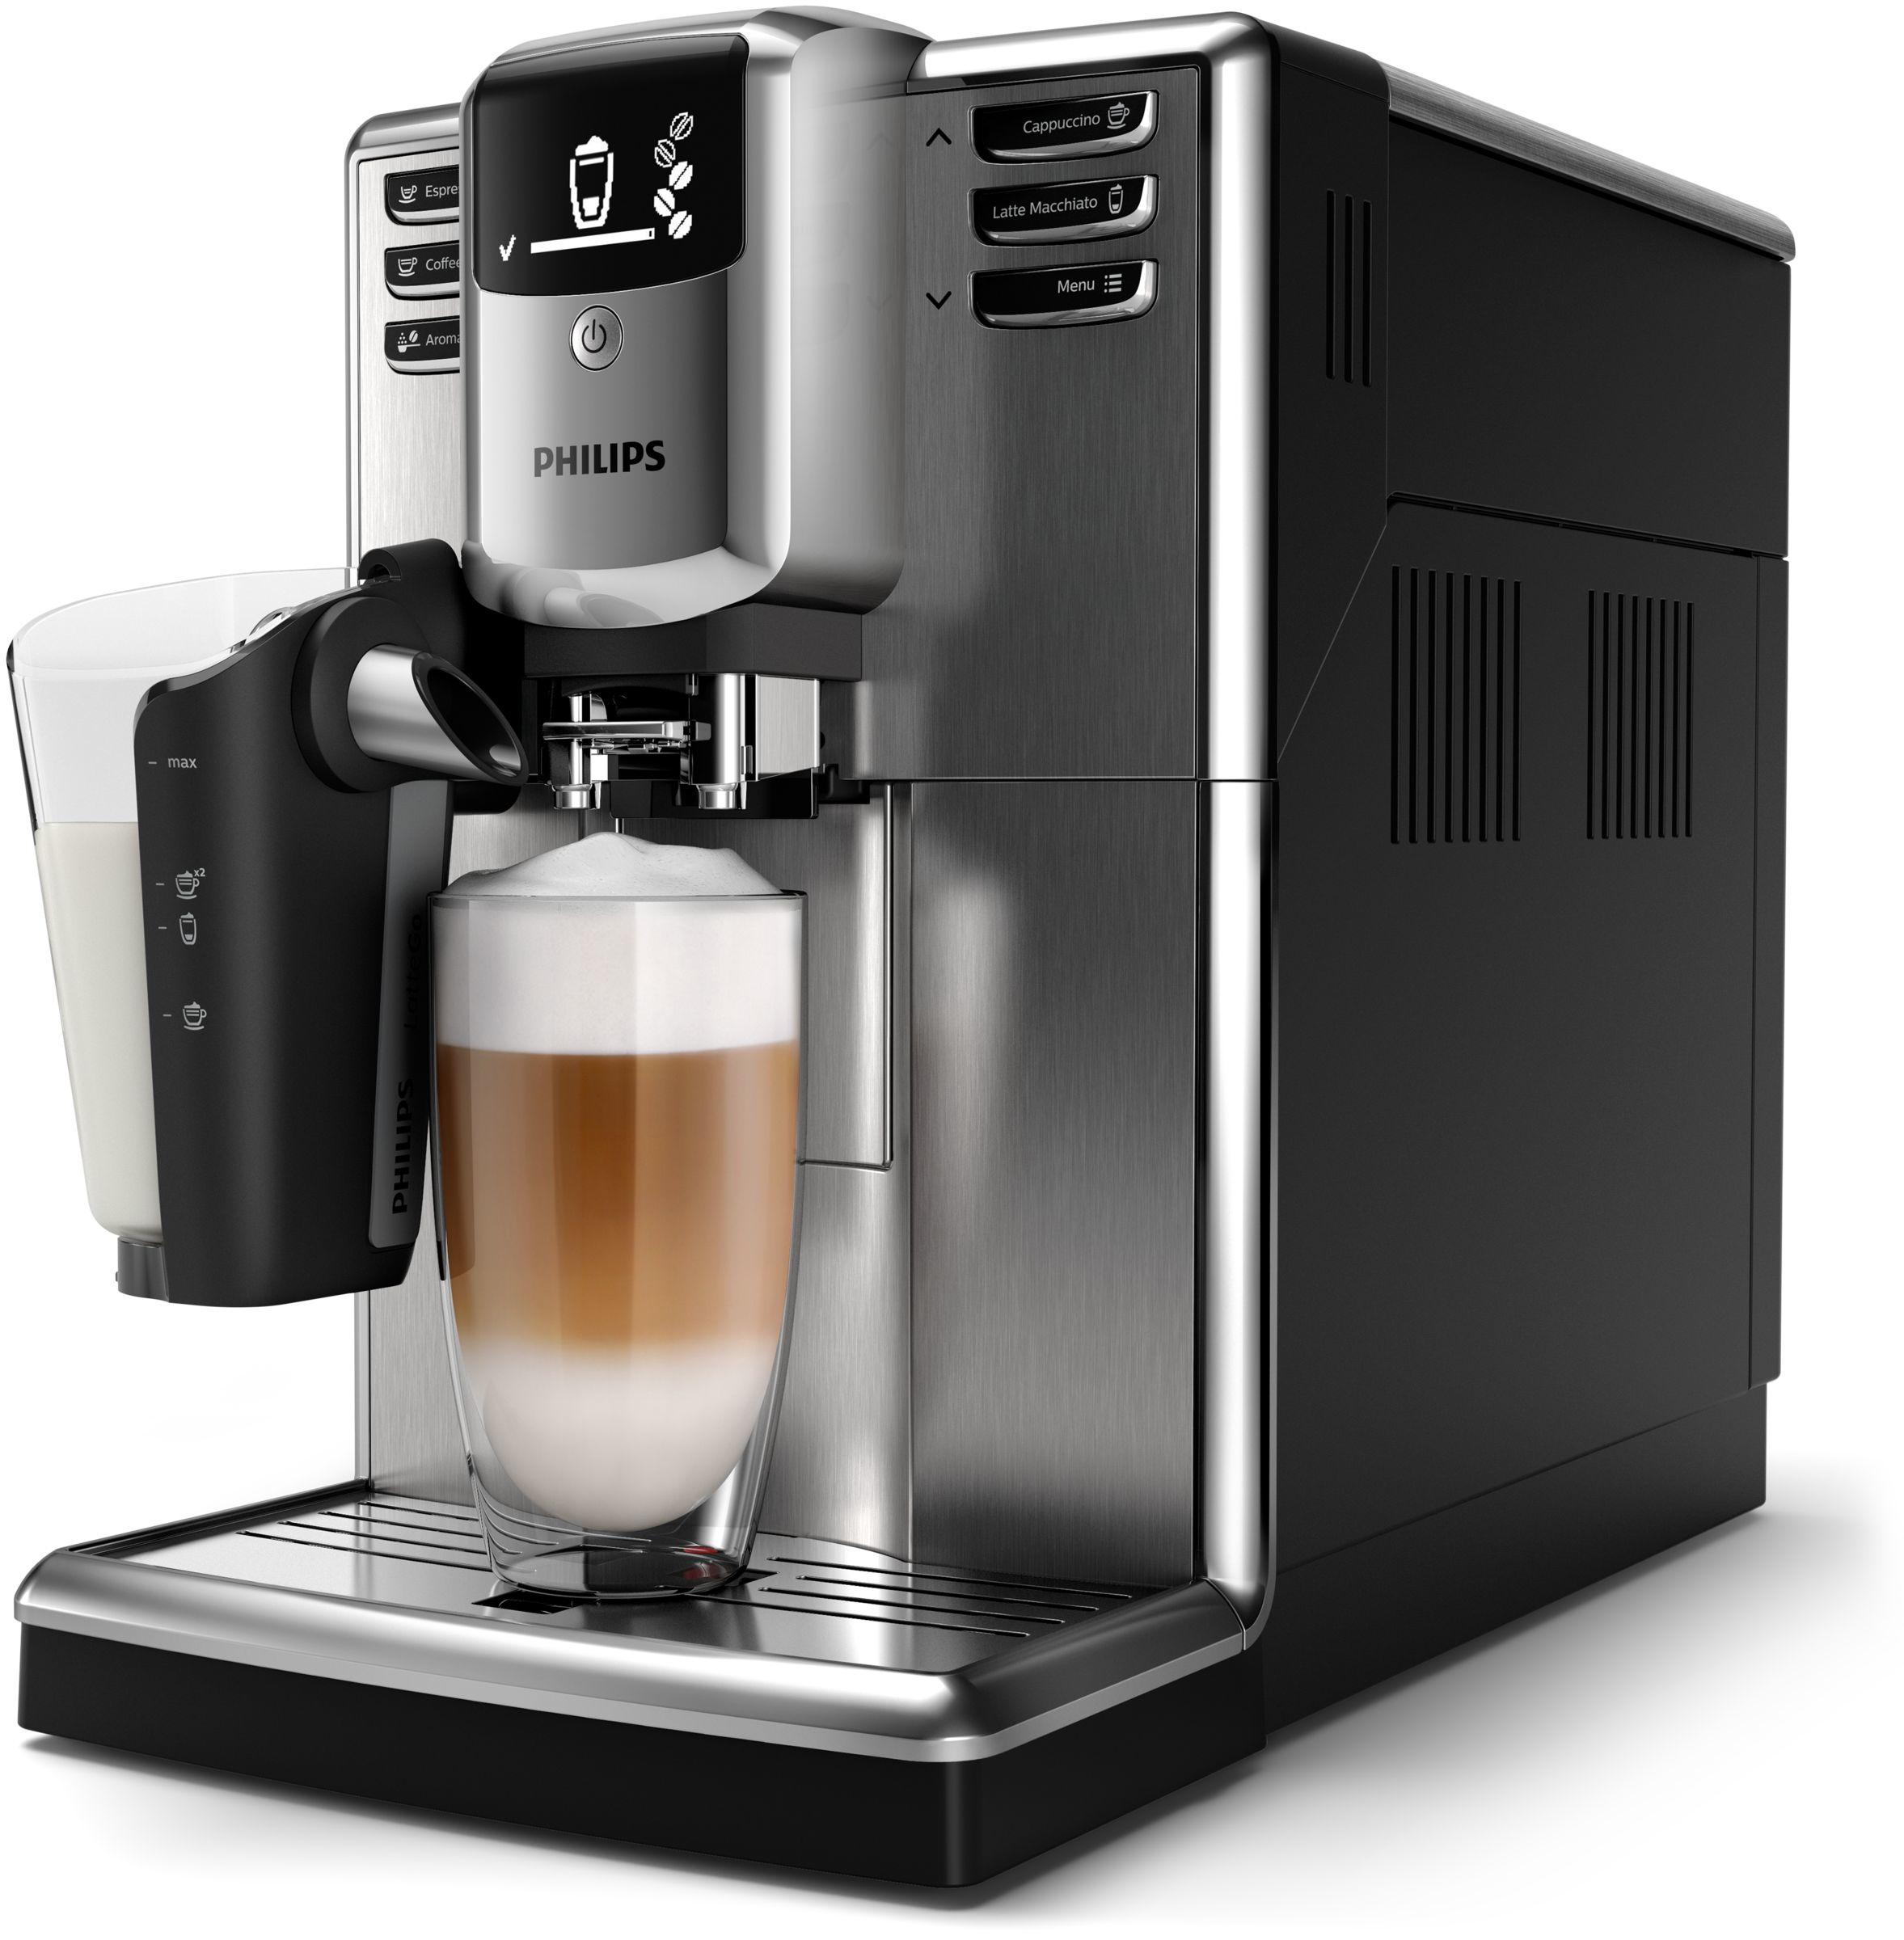 Philips 5000 series EP5045/10 coffee maker